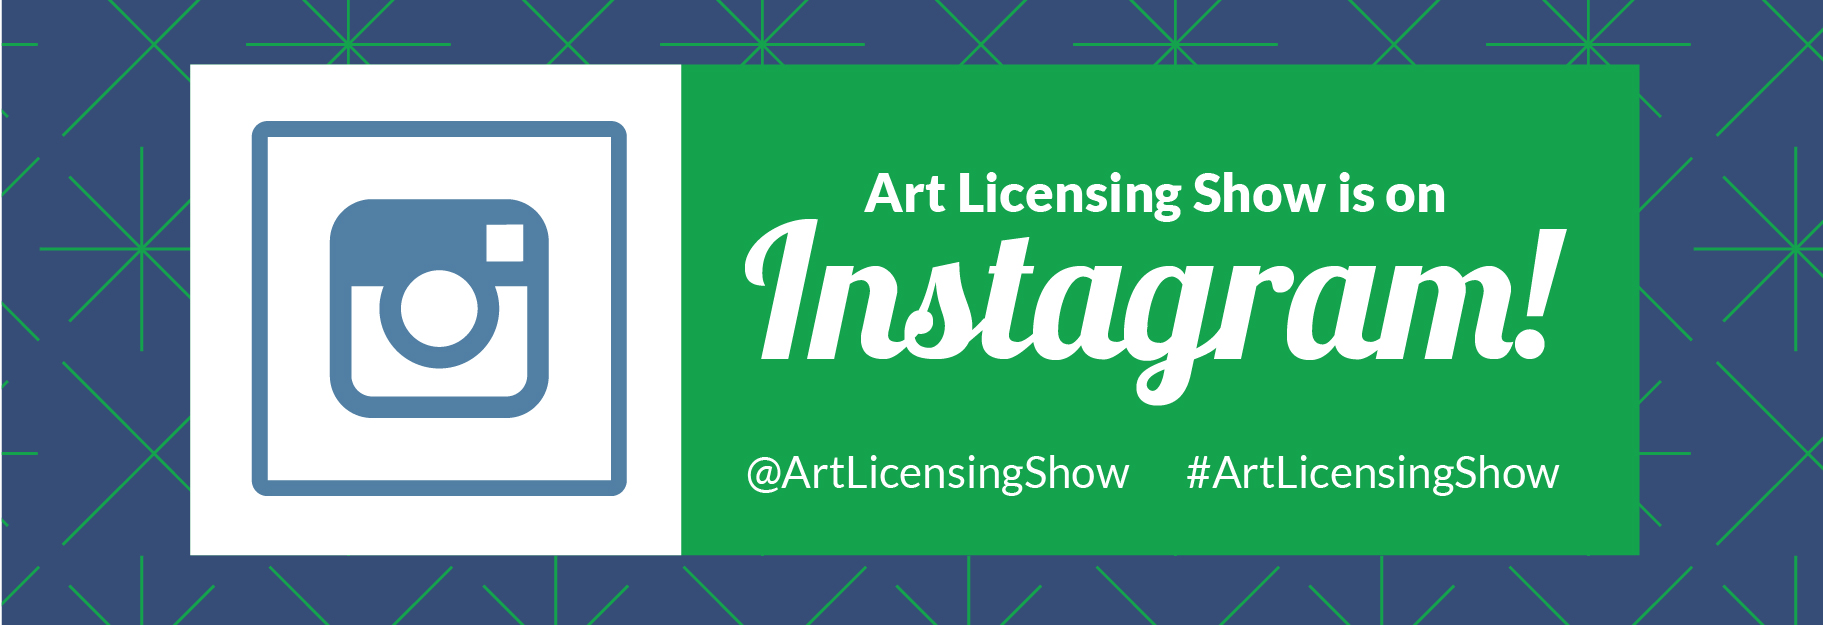 Art Licensing Show Instagram